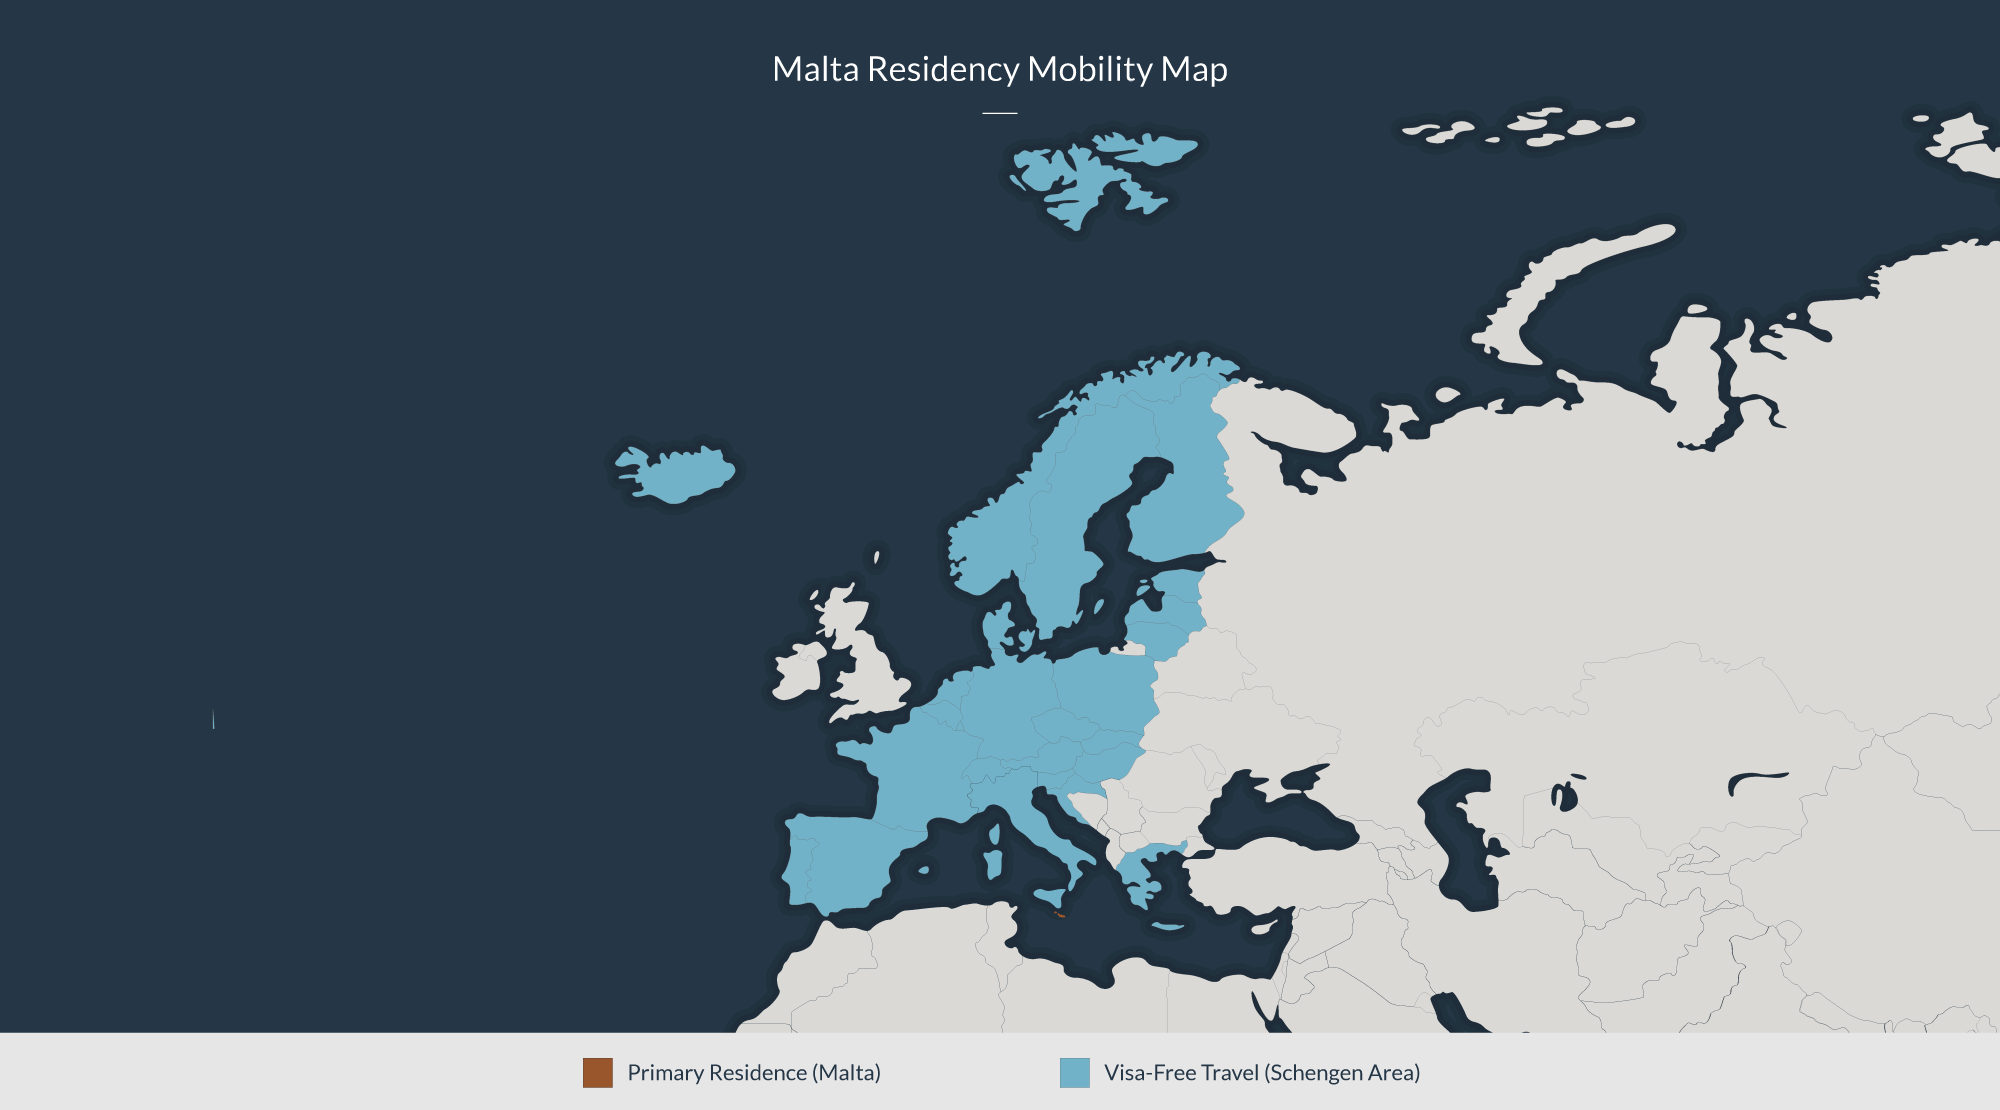 Malta residency mobility map: Primary residence in Malta, Visa-free travel across the Schengen area.